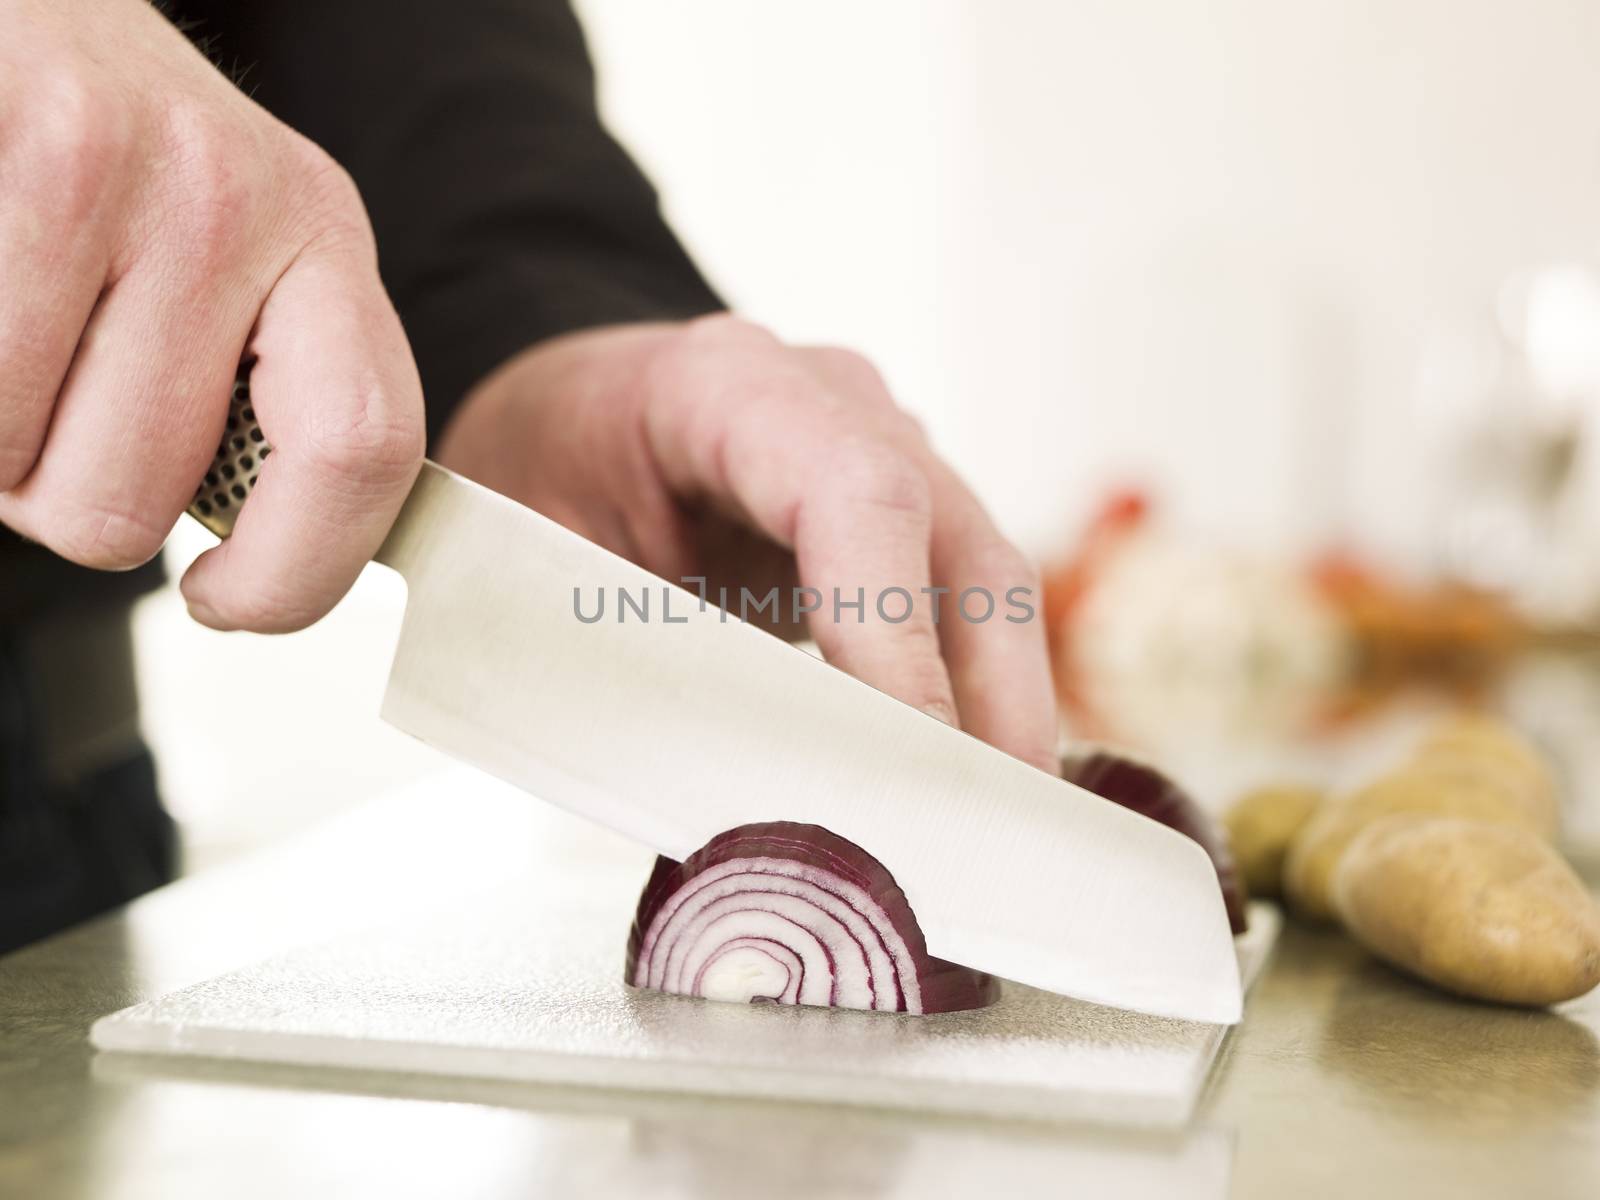 Cutting onion with a knife by gemenacom